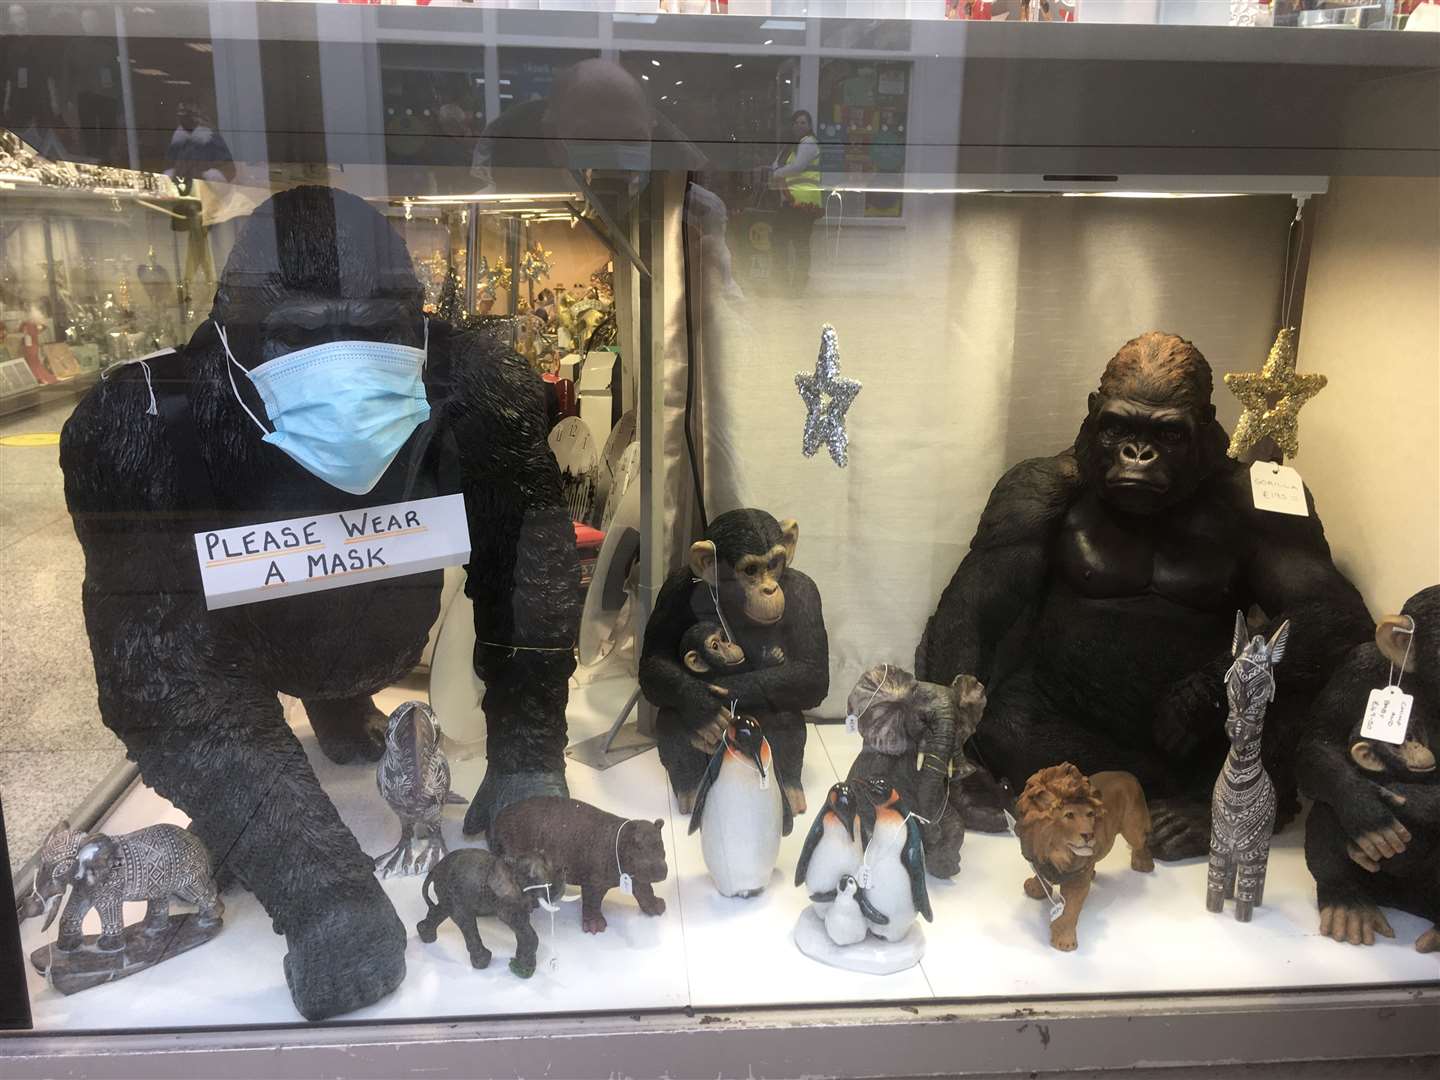 Even gorillas wear masks at Gemini jewellers in Sheerness High Street